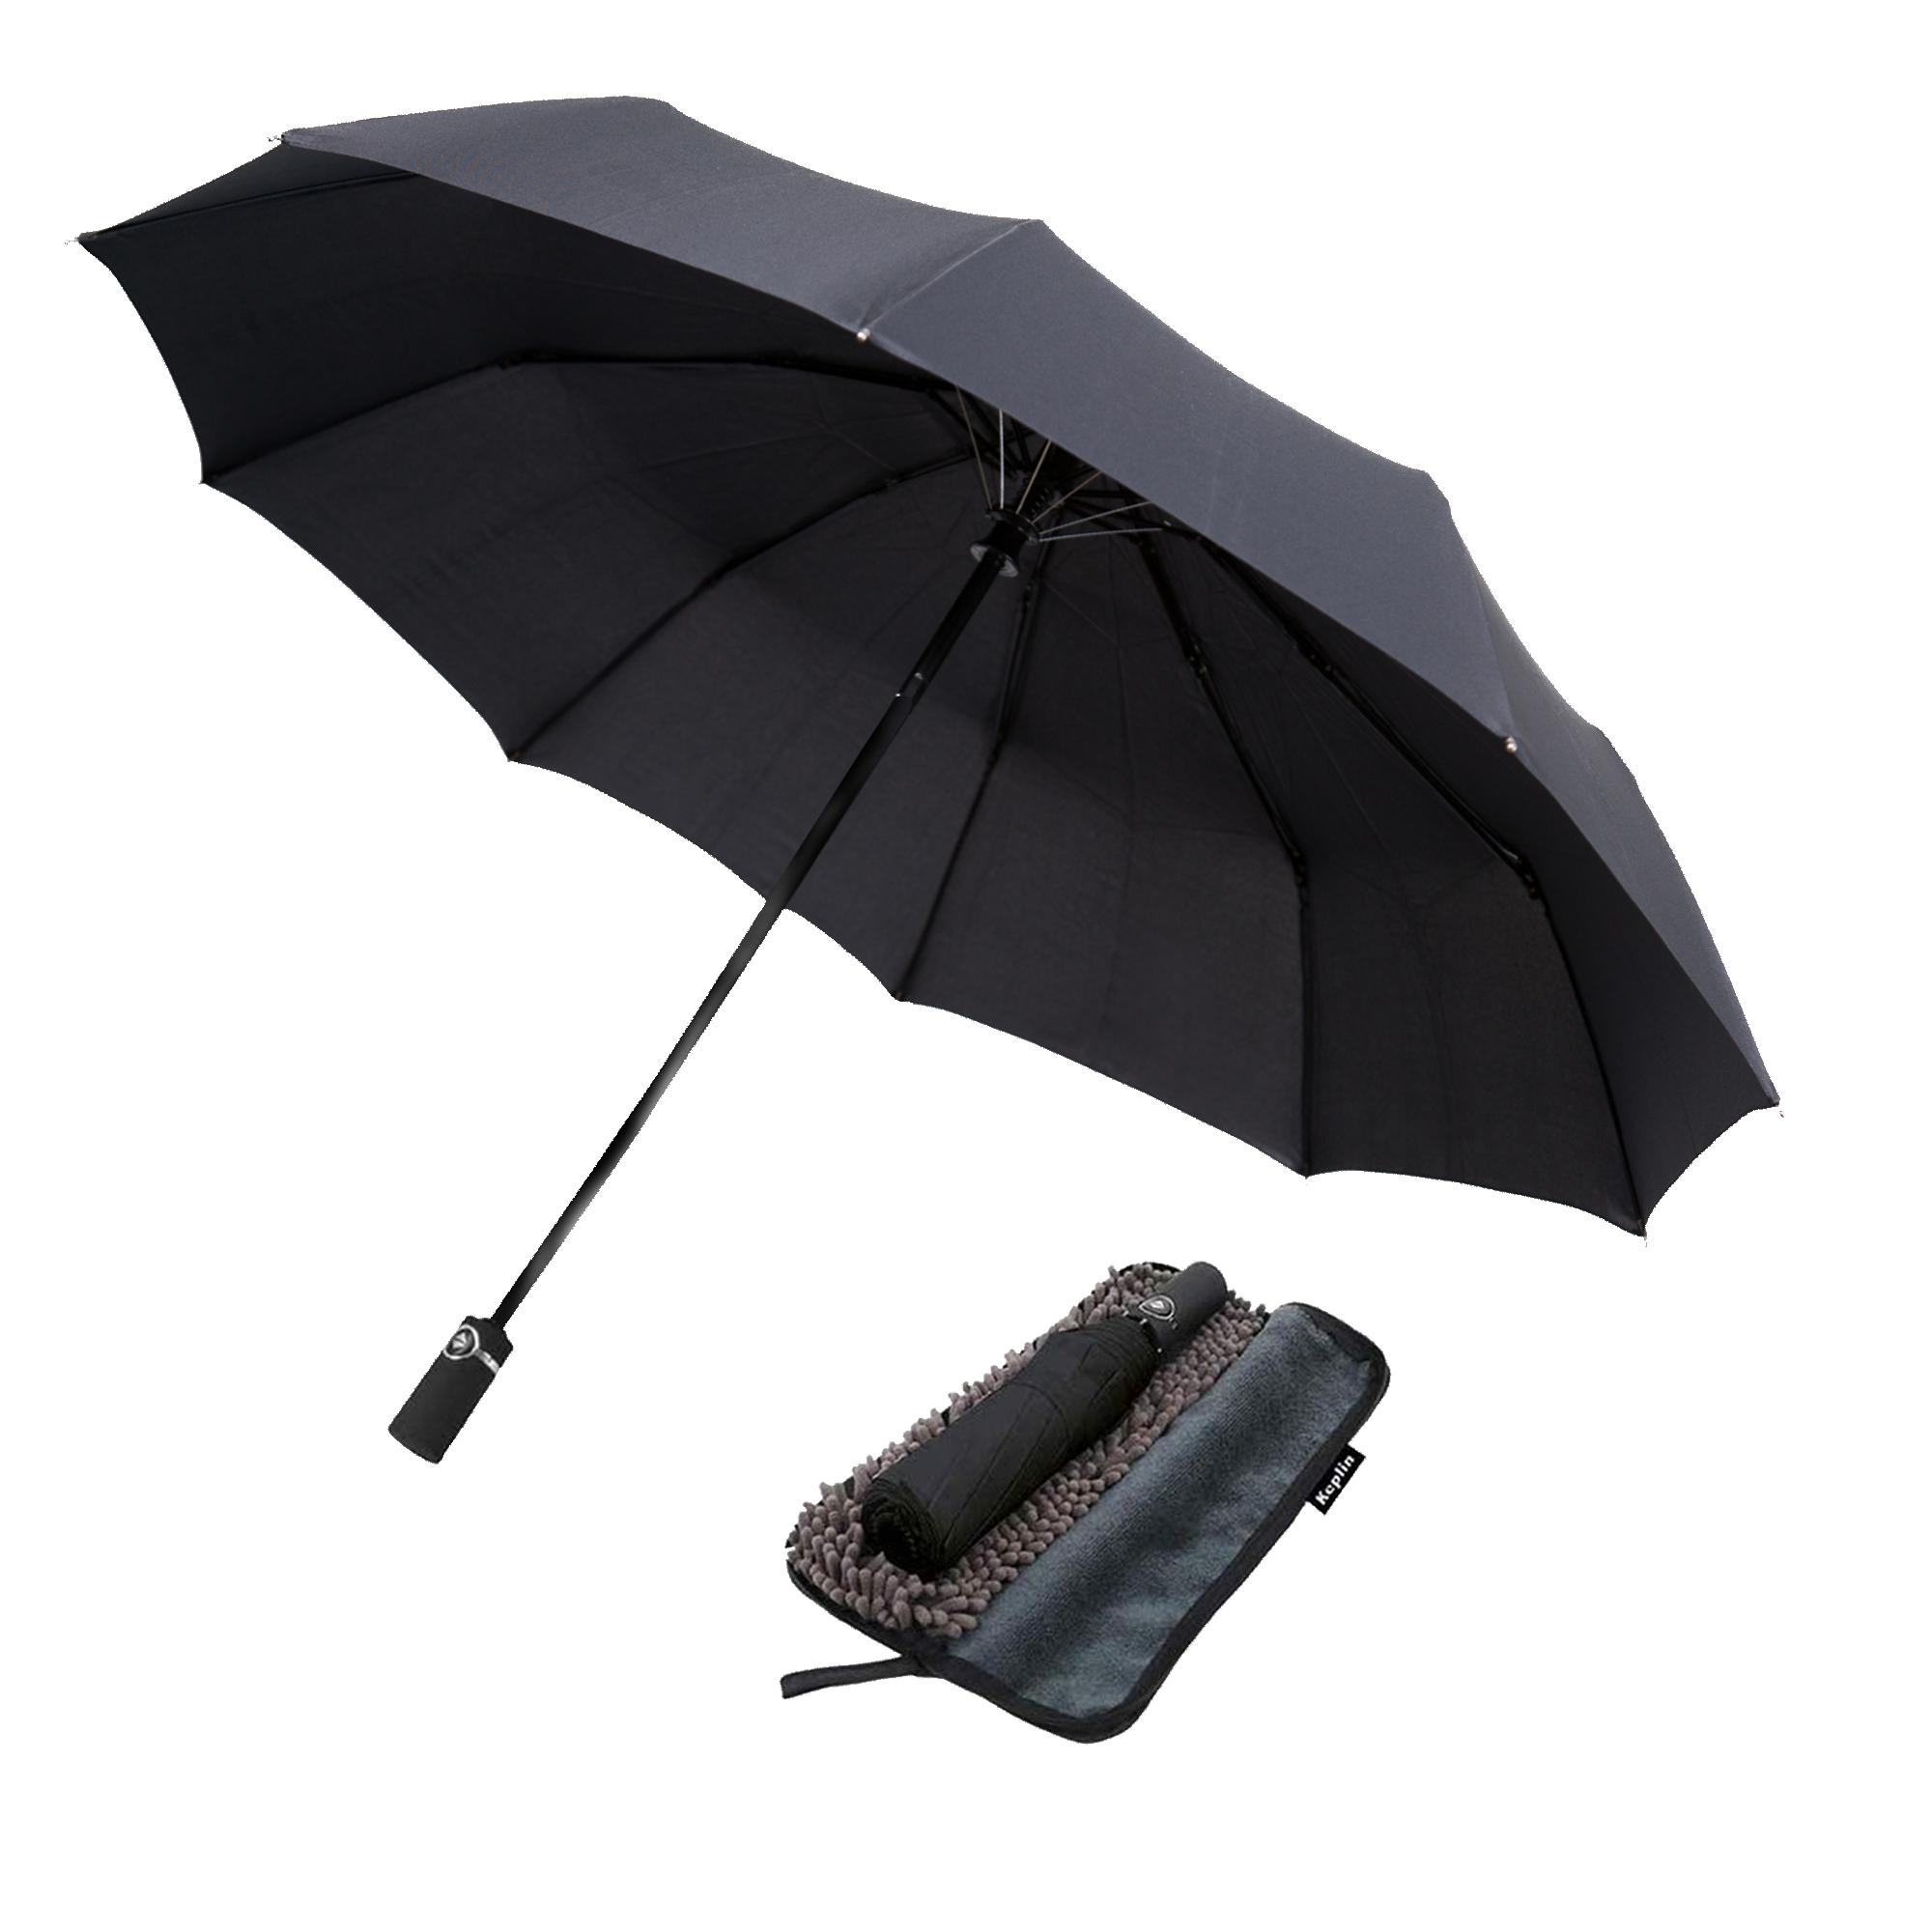 Folding Travel Umbrella with Ergonomic Handle - Portable, Slim, Strong and Lightweight Umbrella